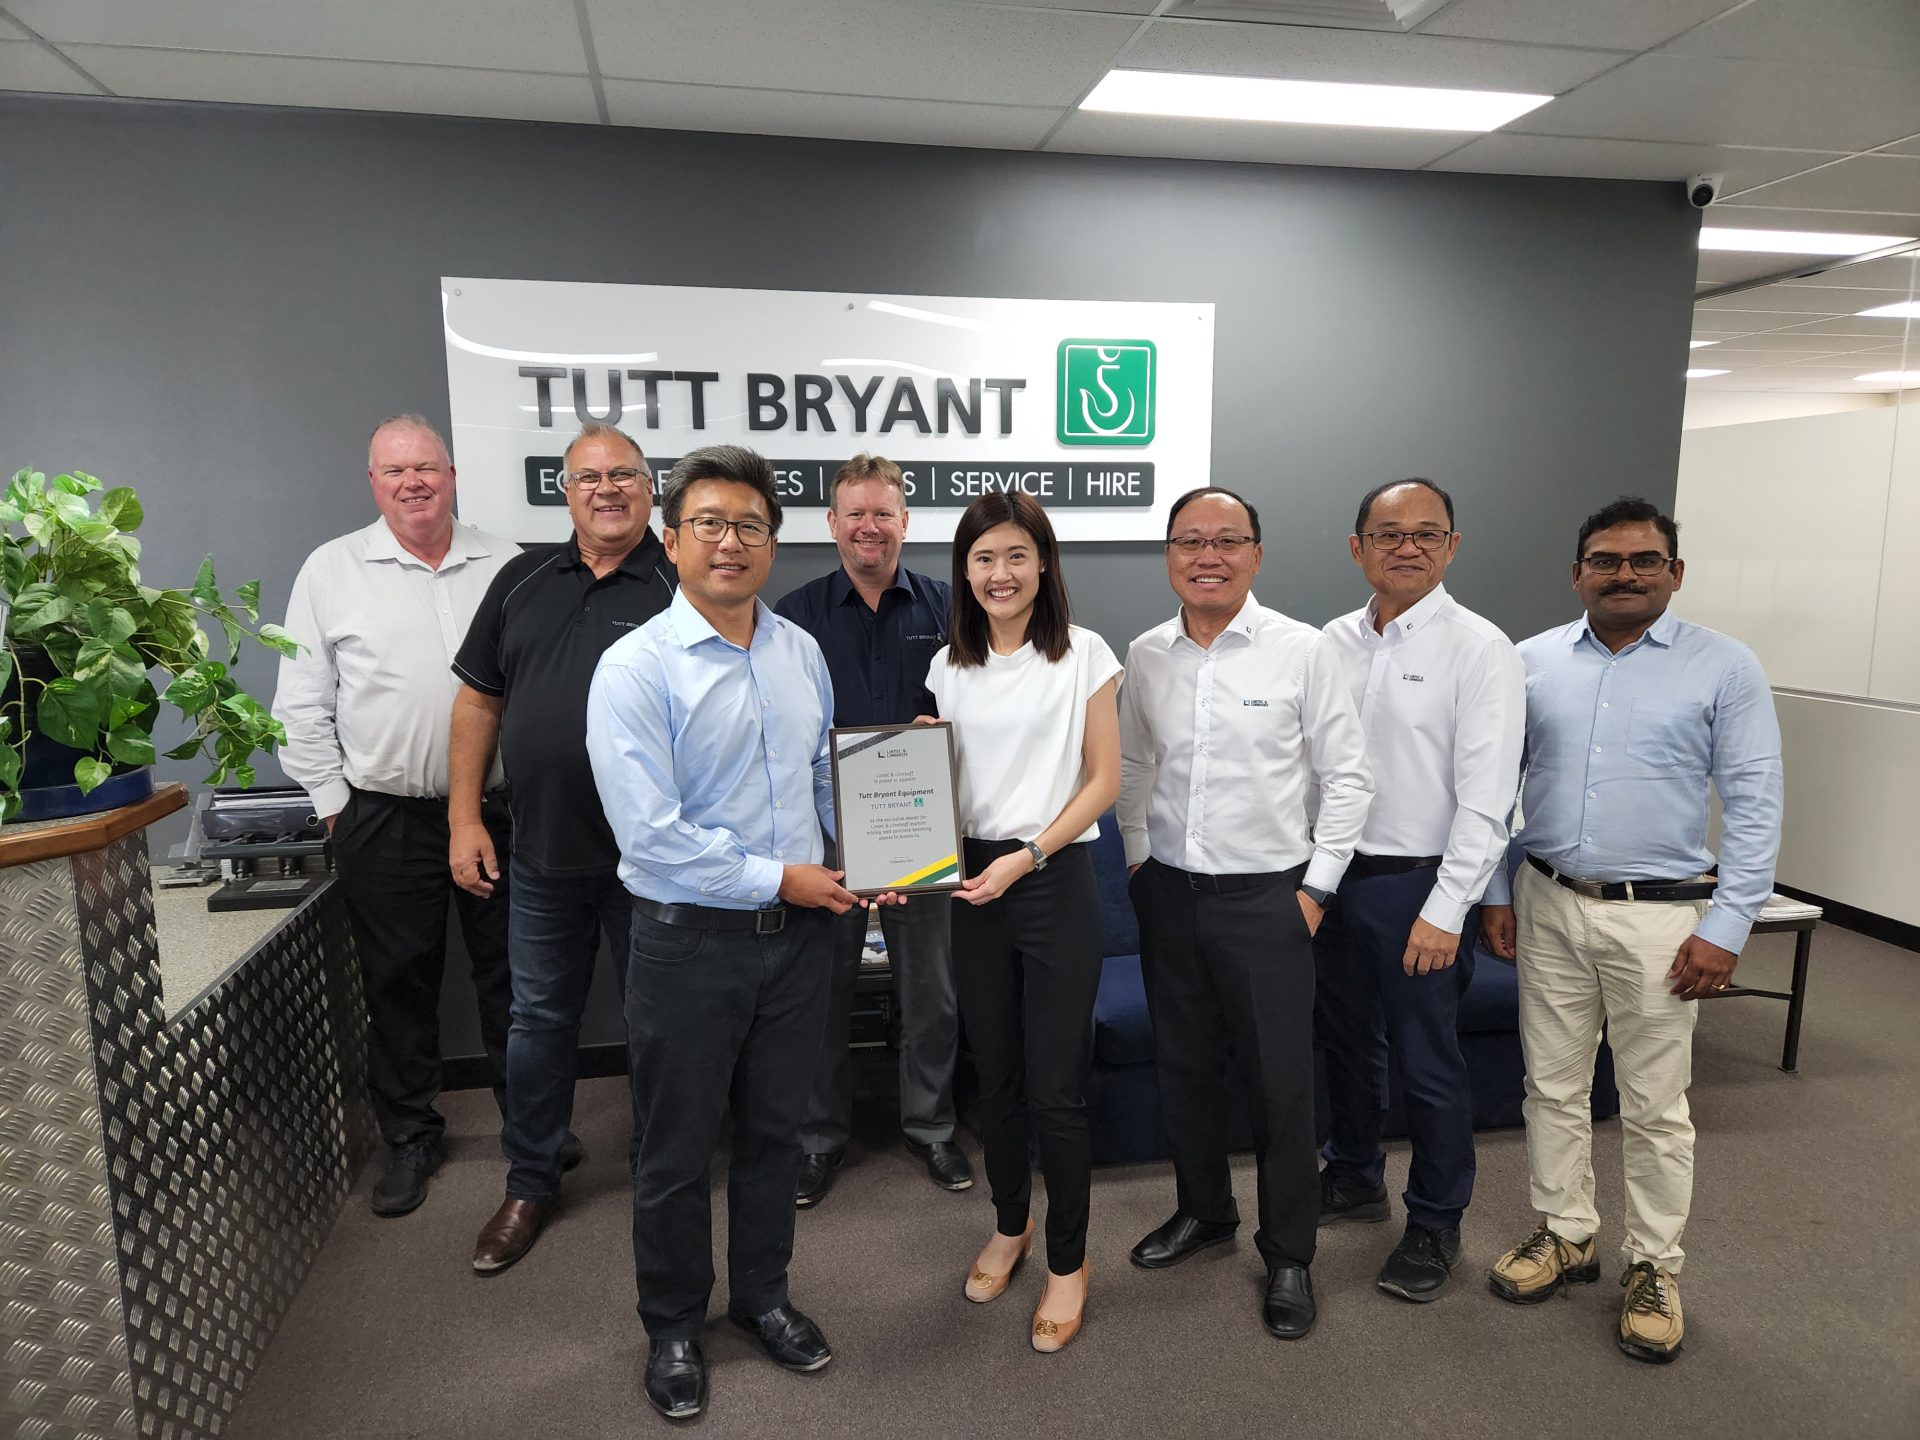 Lintec & Linnhoff inks distributor agreement with Tutt Bryant in Australia